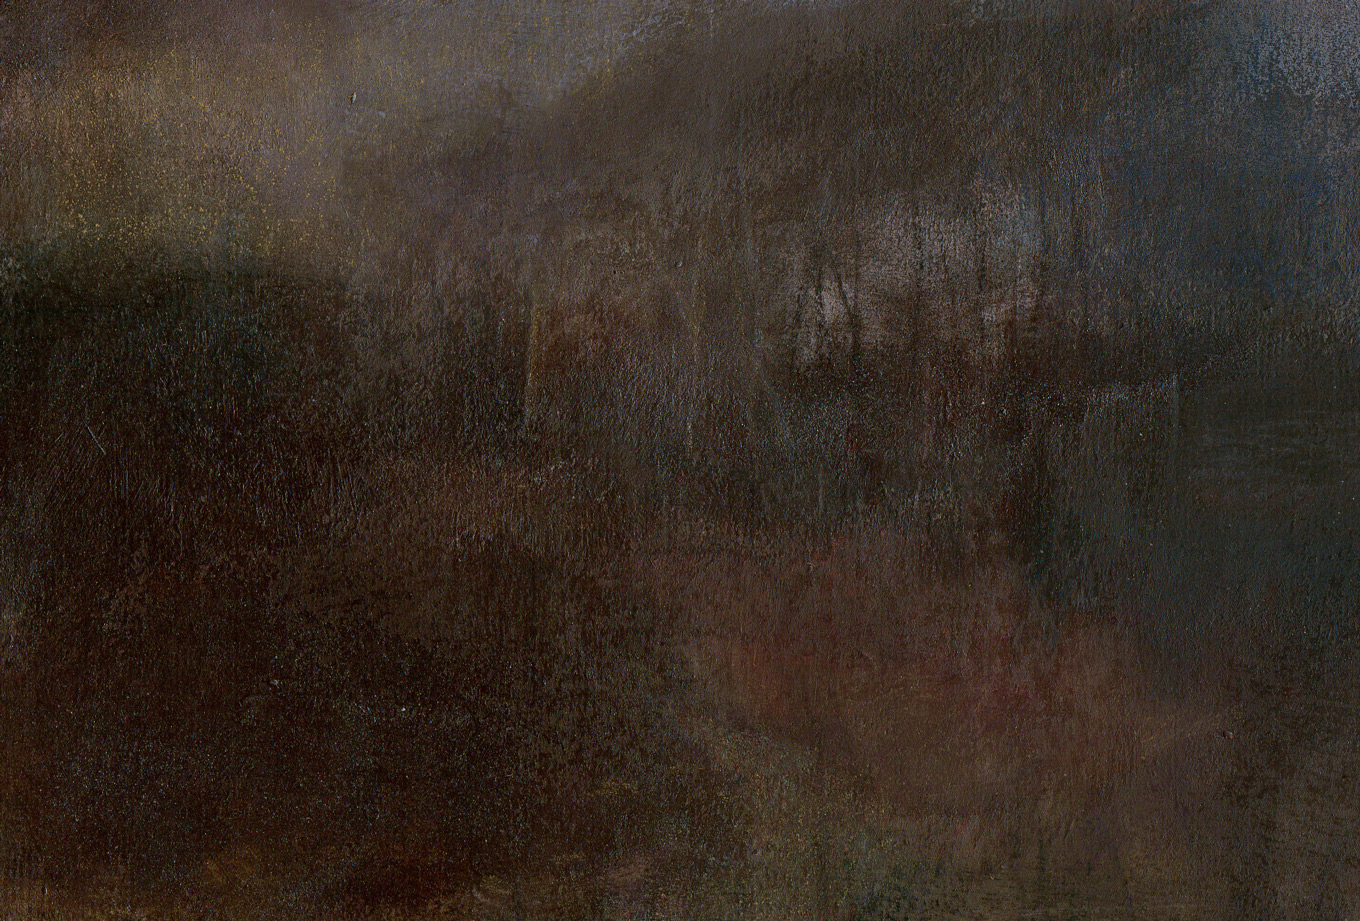 L1194 - Nicholas Herbert, British Artist, mixed media landscape painting of Chobham Common, mixed media on paper,2020